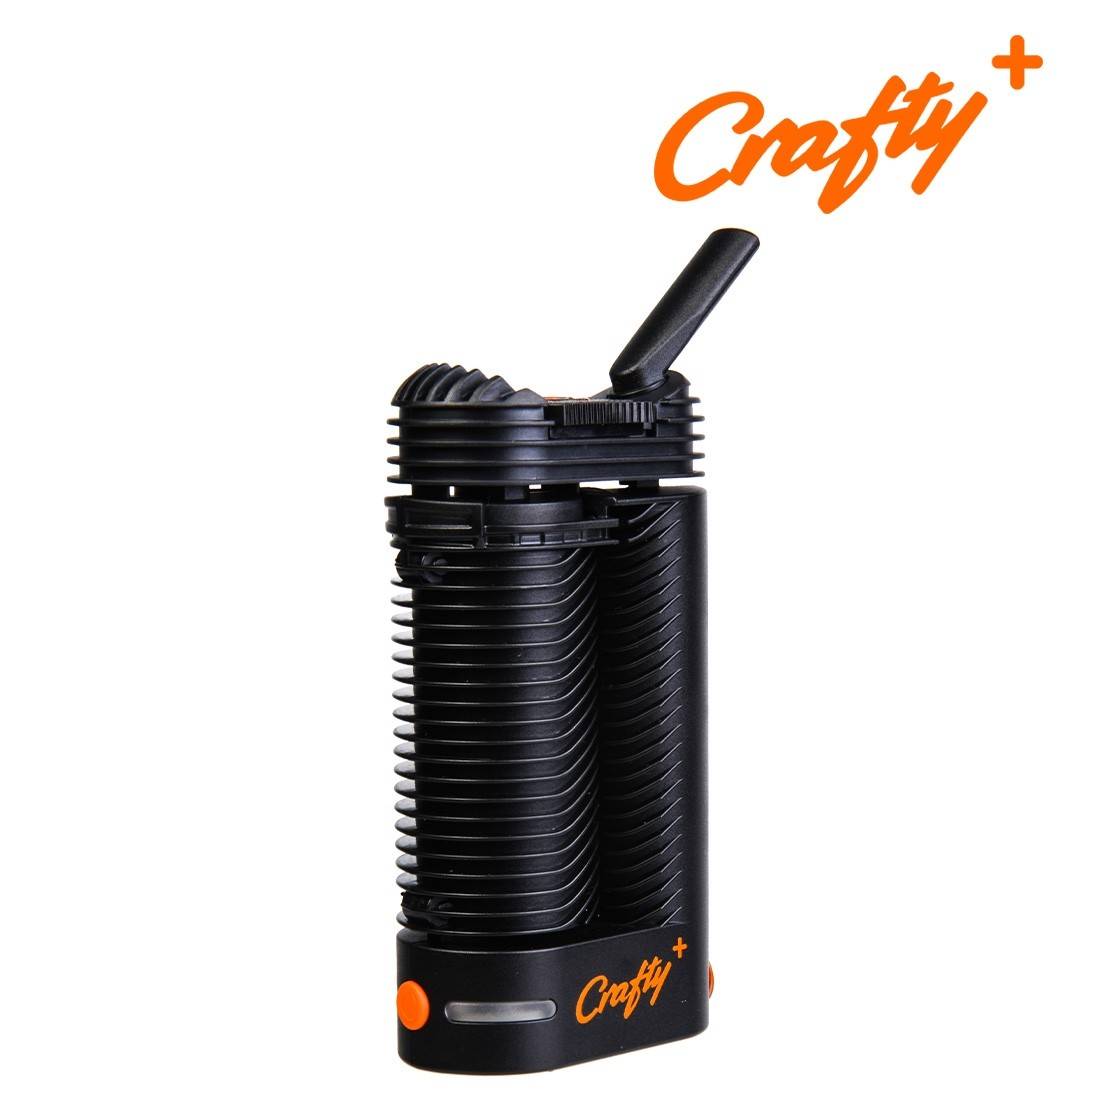 crafty + - vaporisateur portable - storz & bickel 